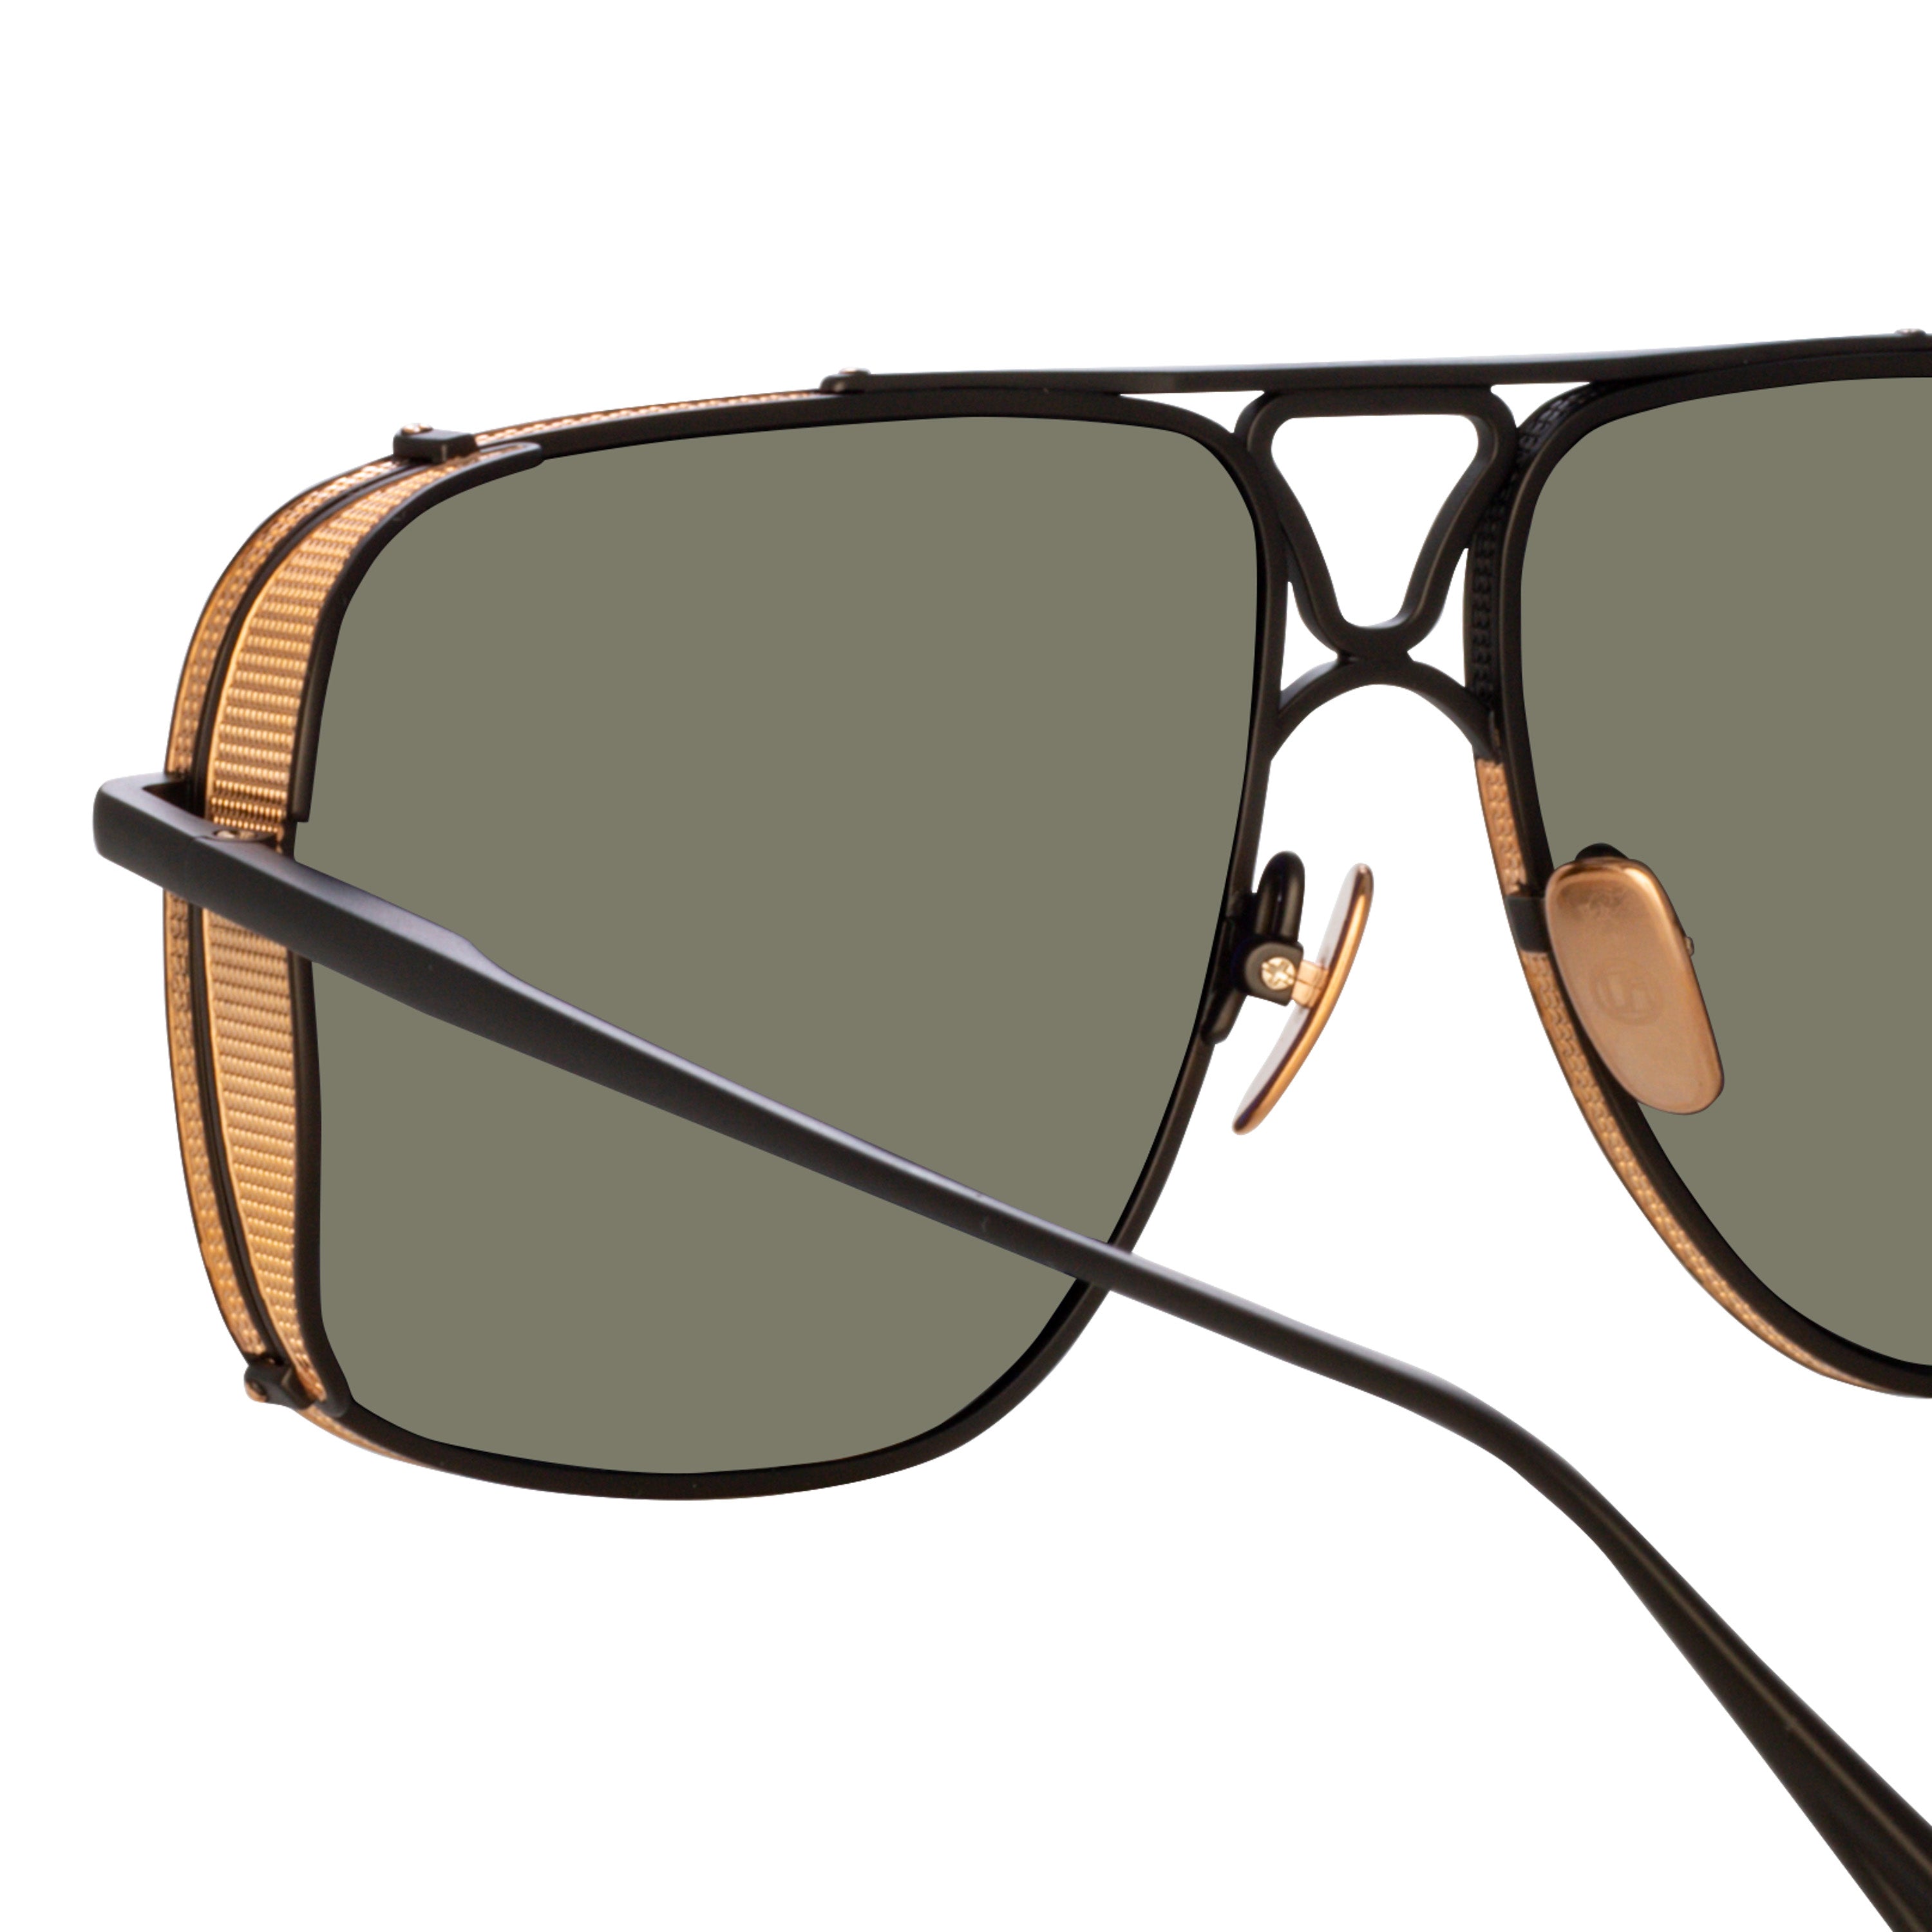 Men's Enzo Aviator Sunglasses in Nickel